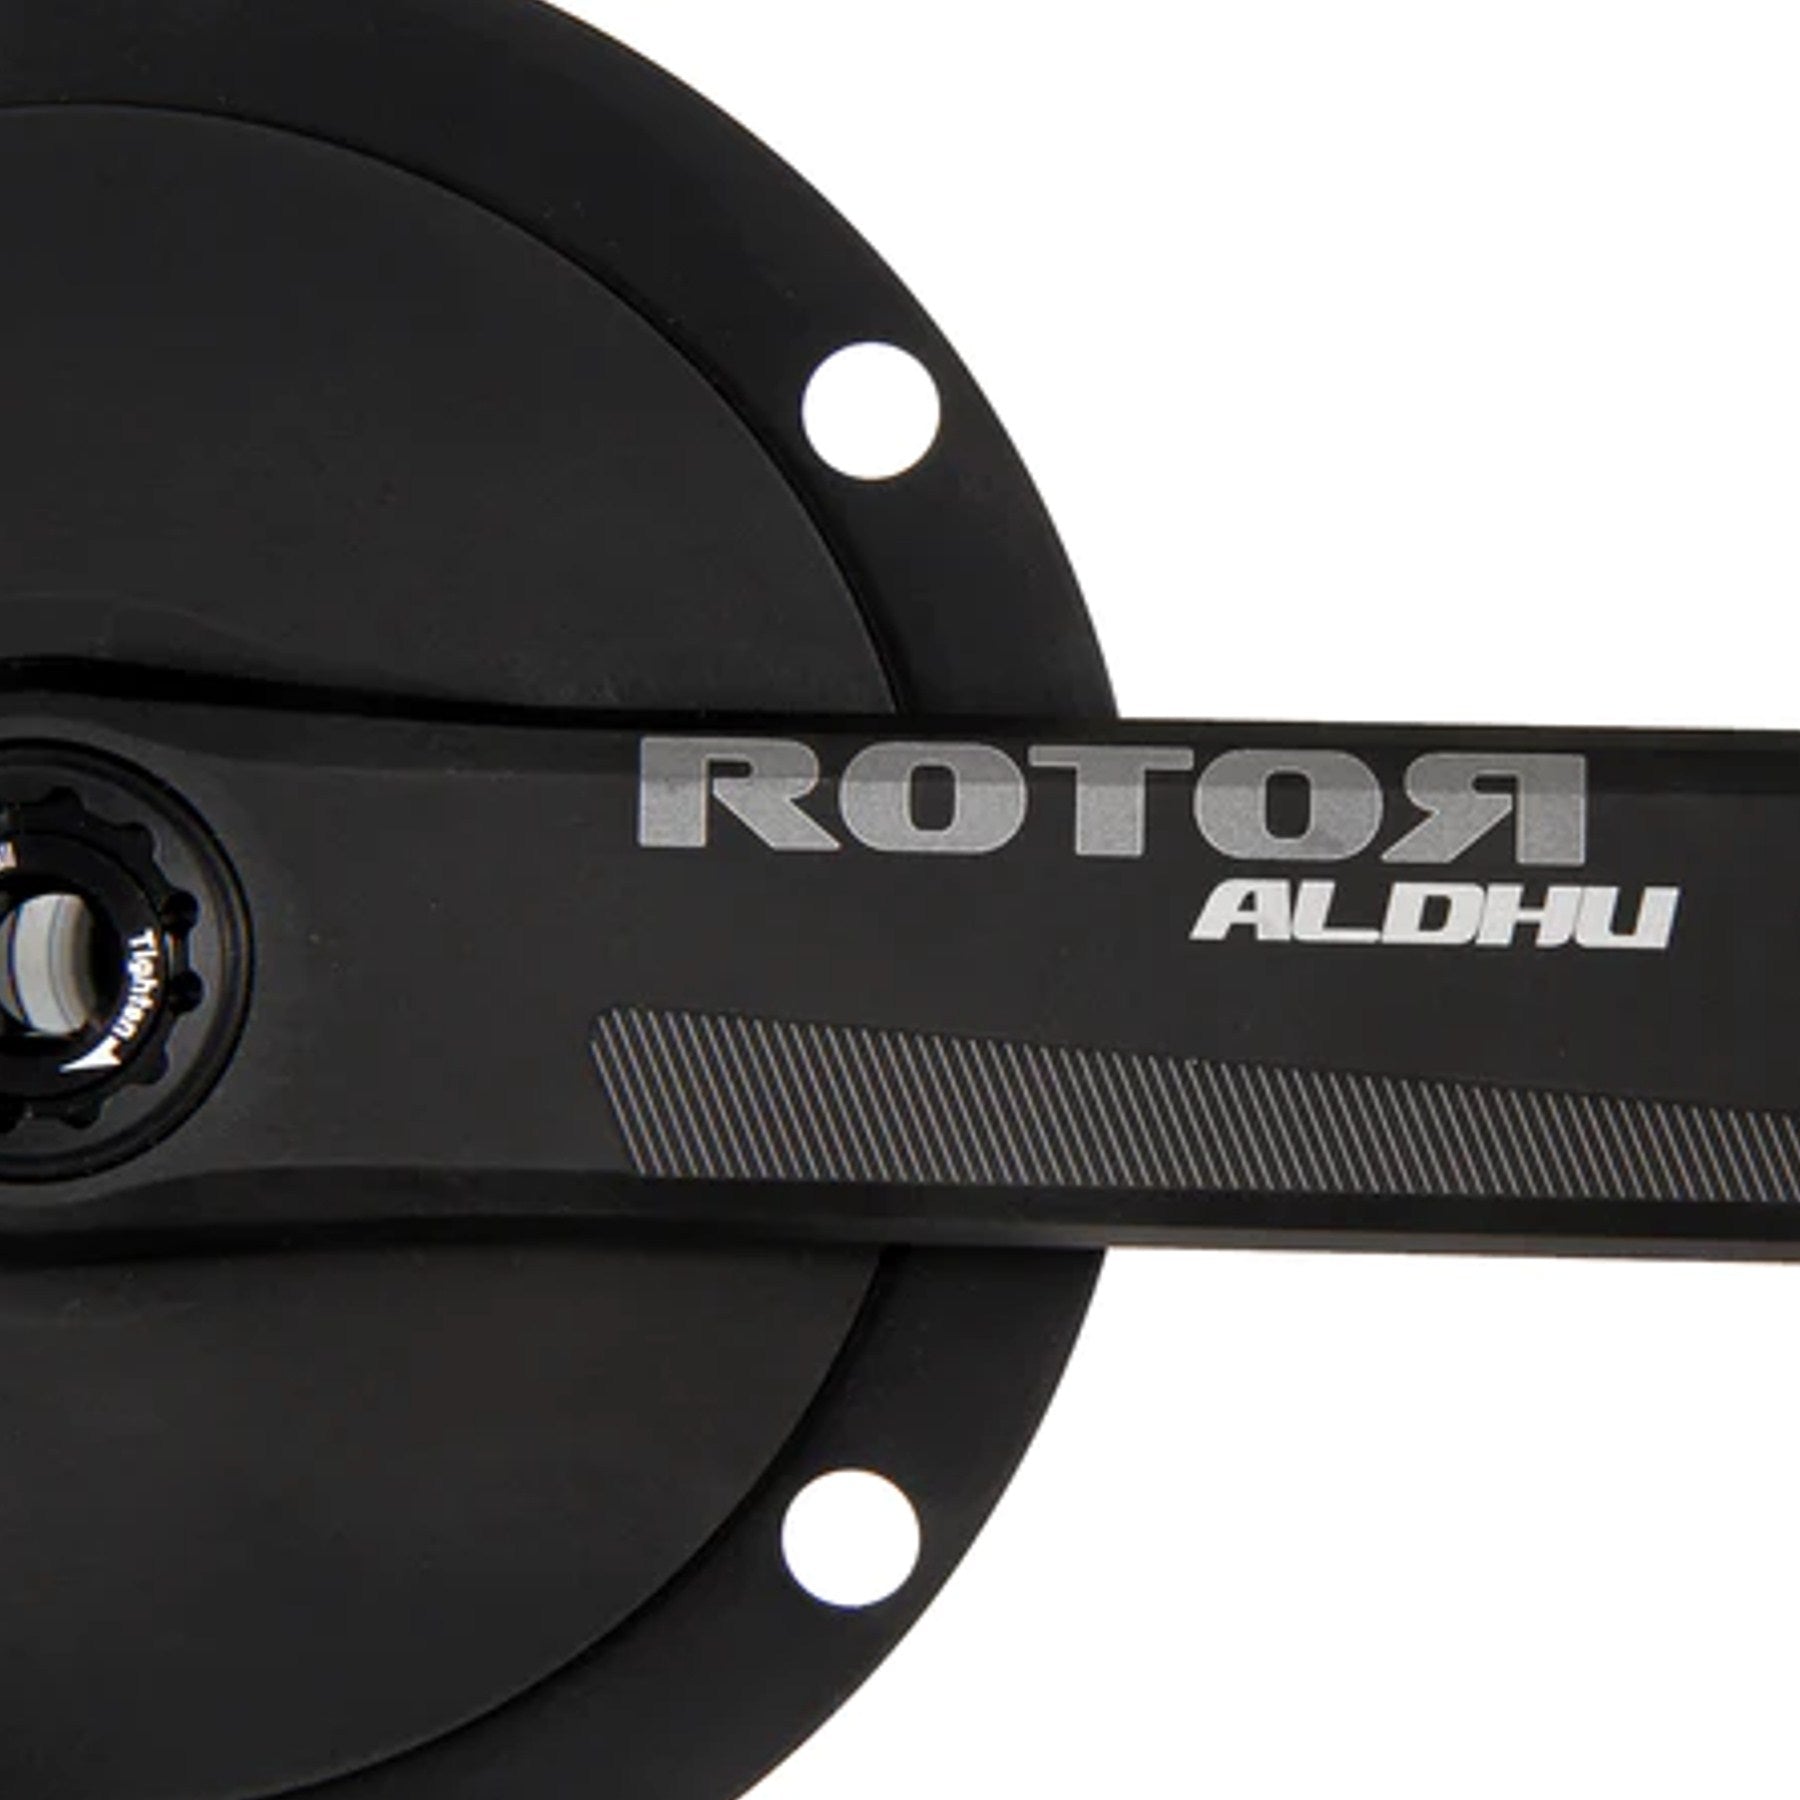 Rotor ALDHU Track crank arms, spider & axle - Retrogression Fixed Gear